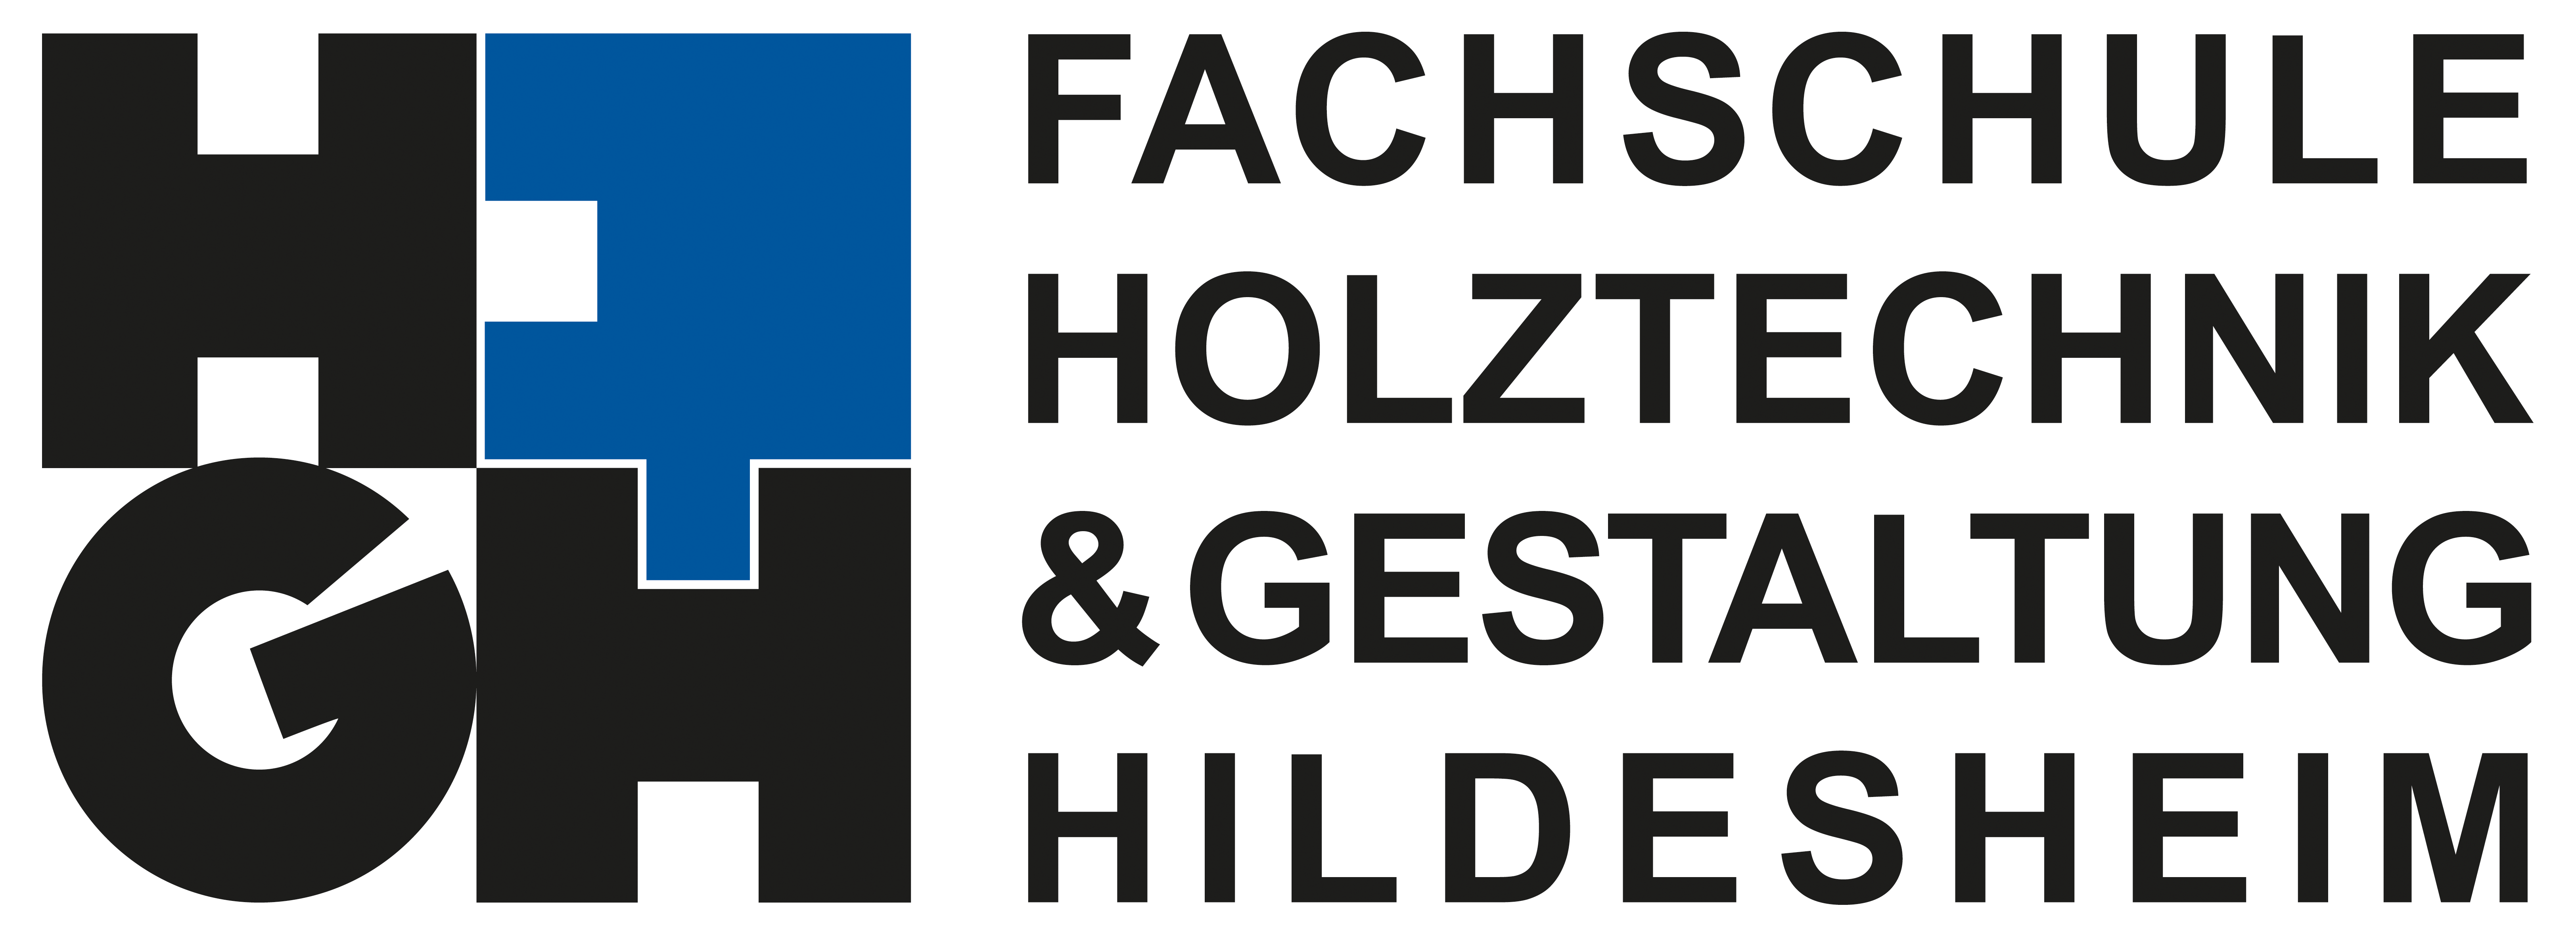 Logo Fachschule Holztechnik & Gestaltung